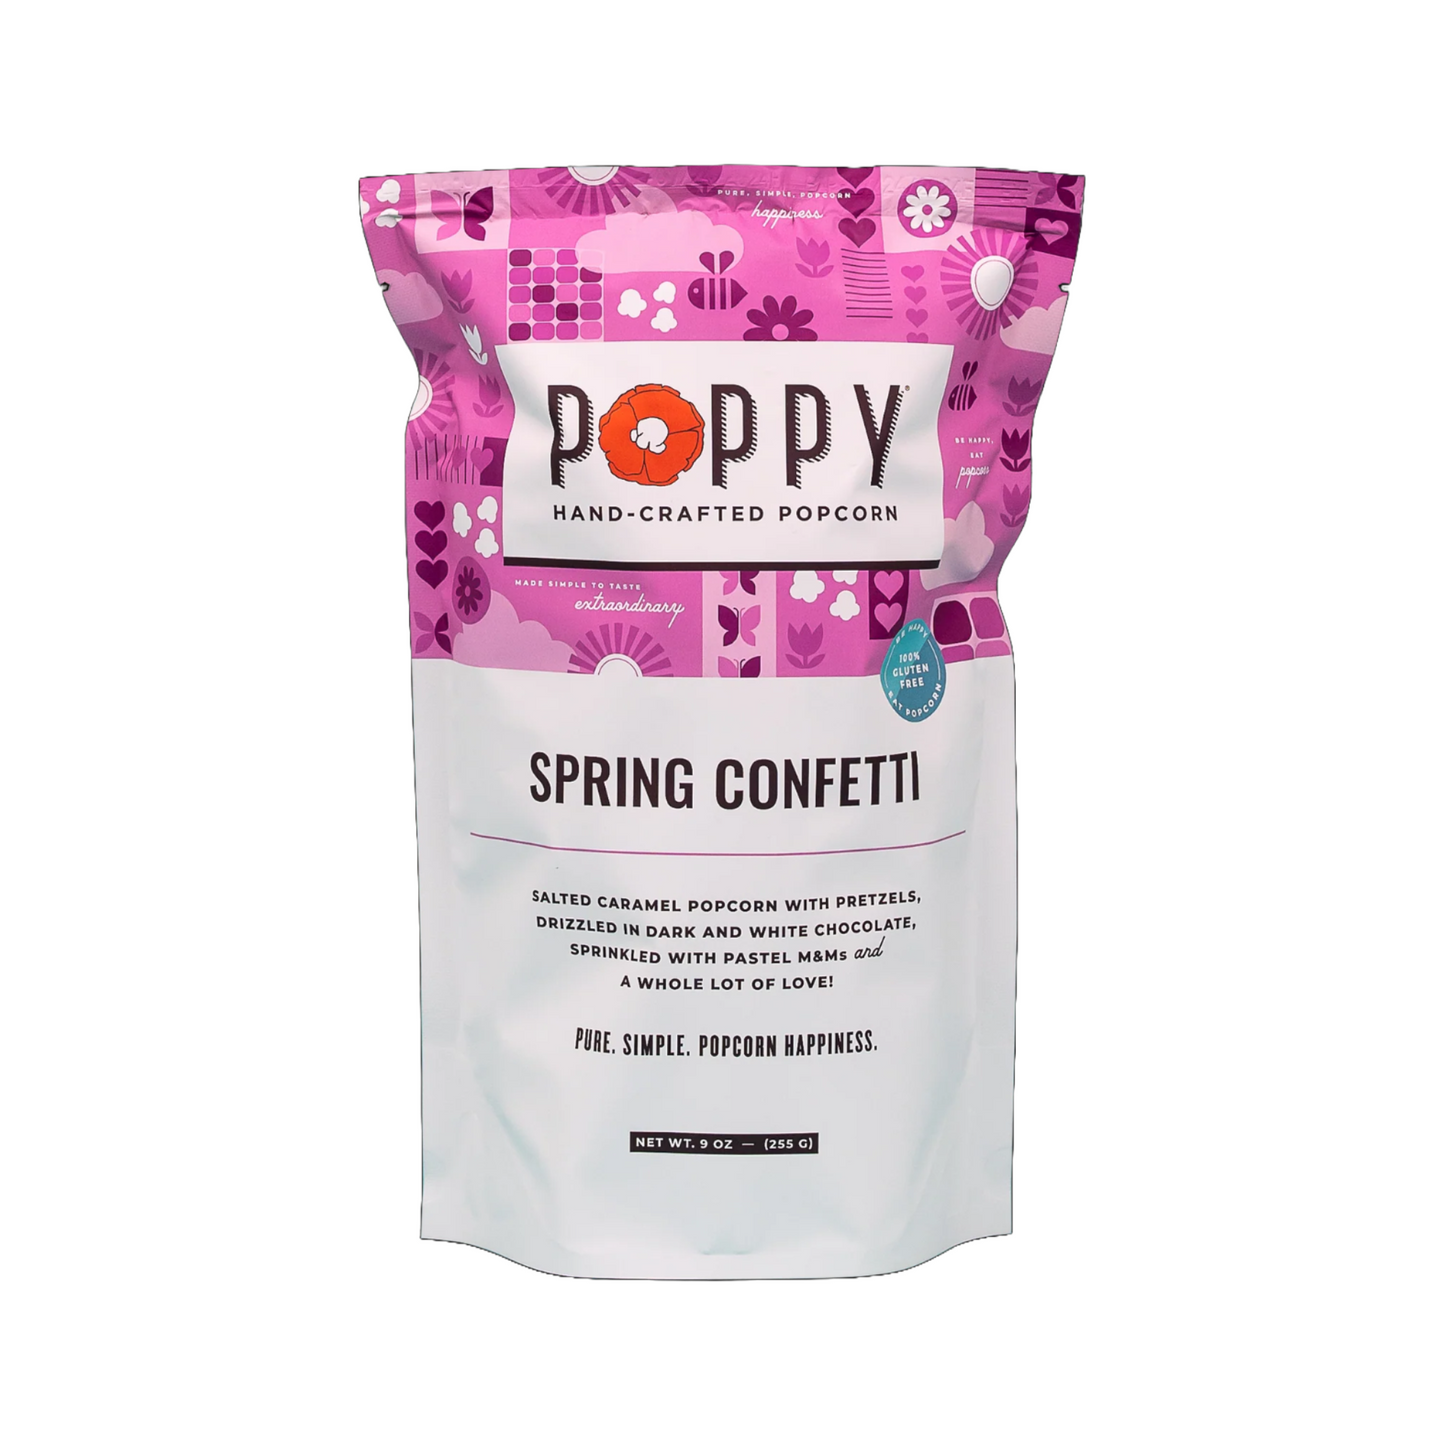 Spring Confetti Popcorn by Poppy Hand-Crafted Popcorn